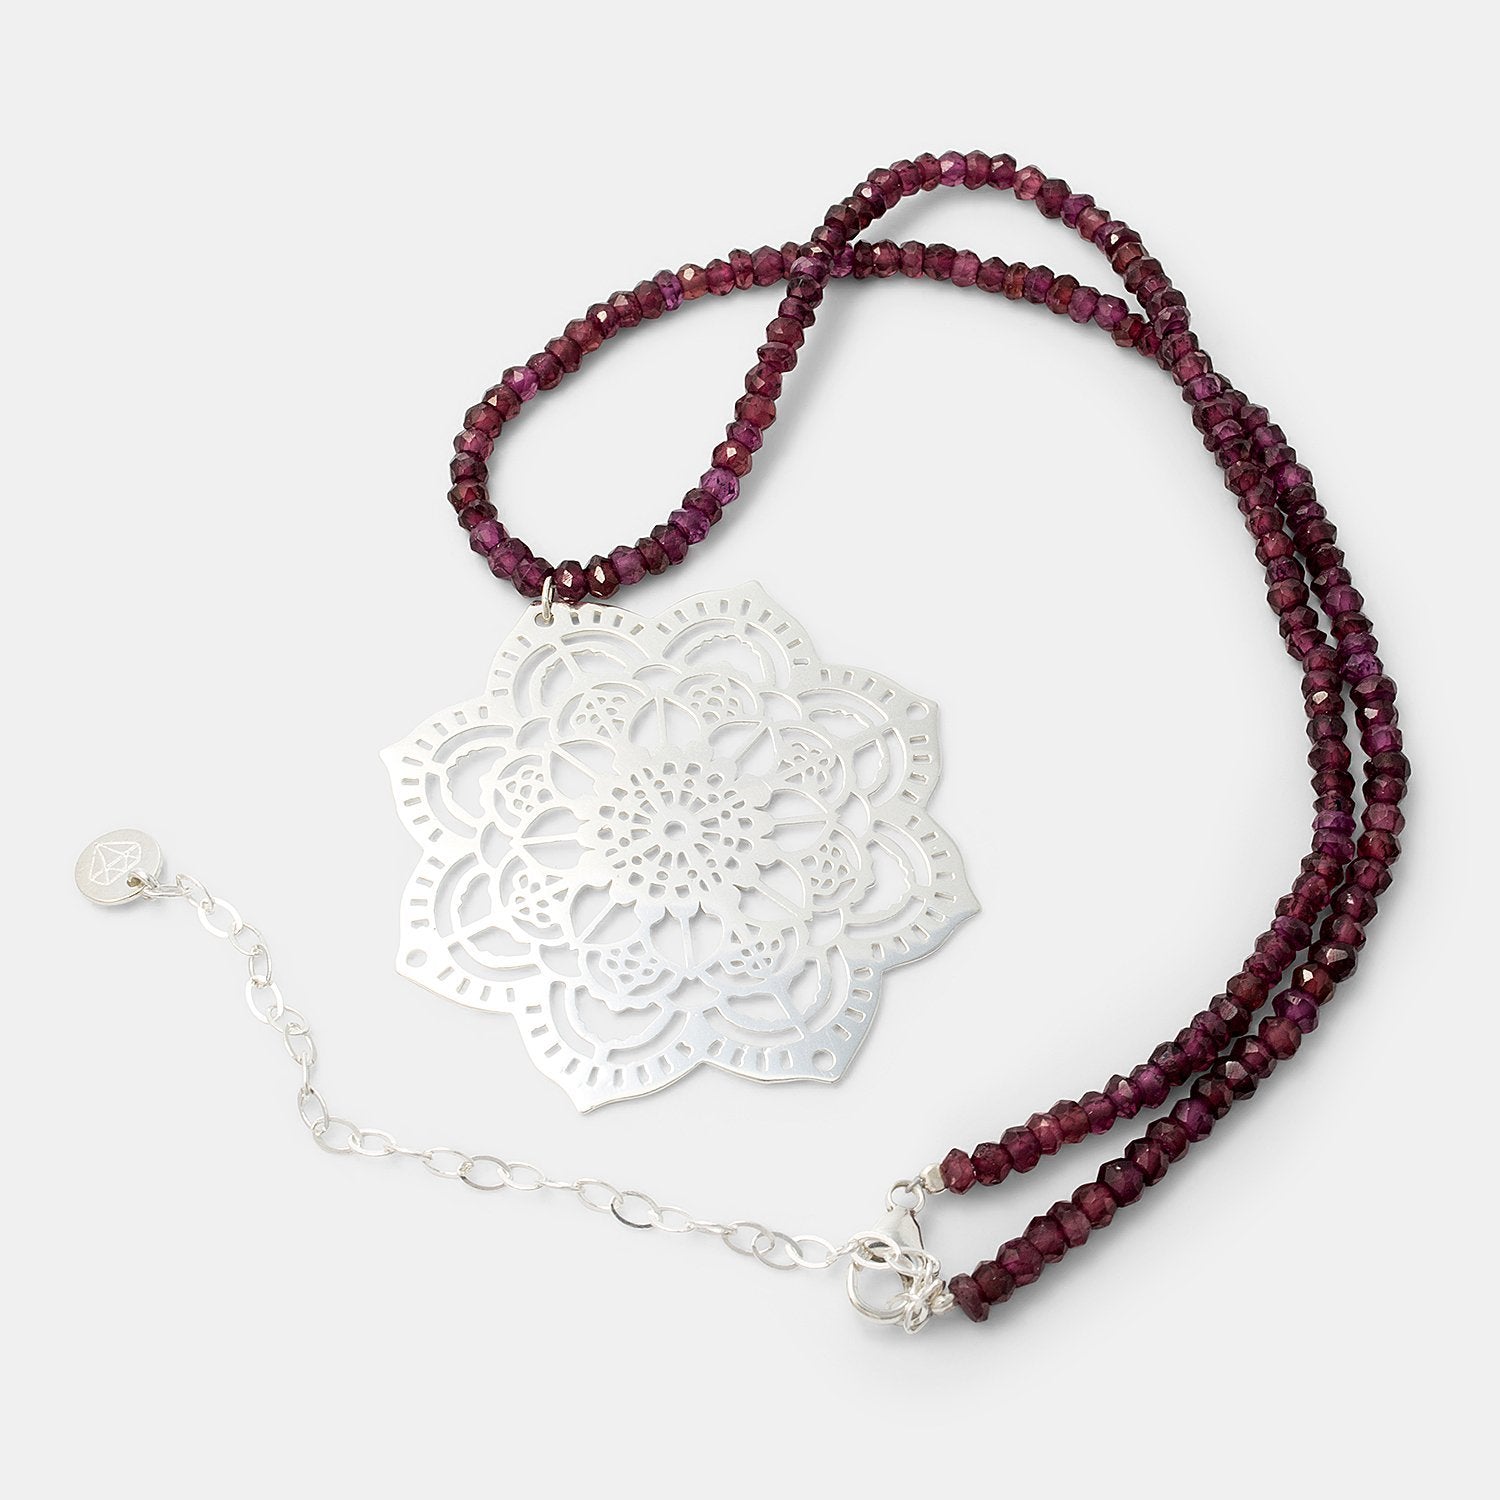 Mehndi mandala & rose garnet necklace - Simone Walsh Jewellery Australia